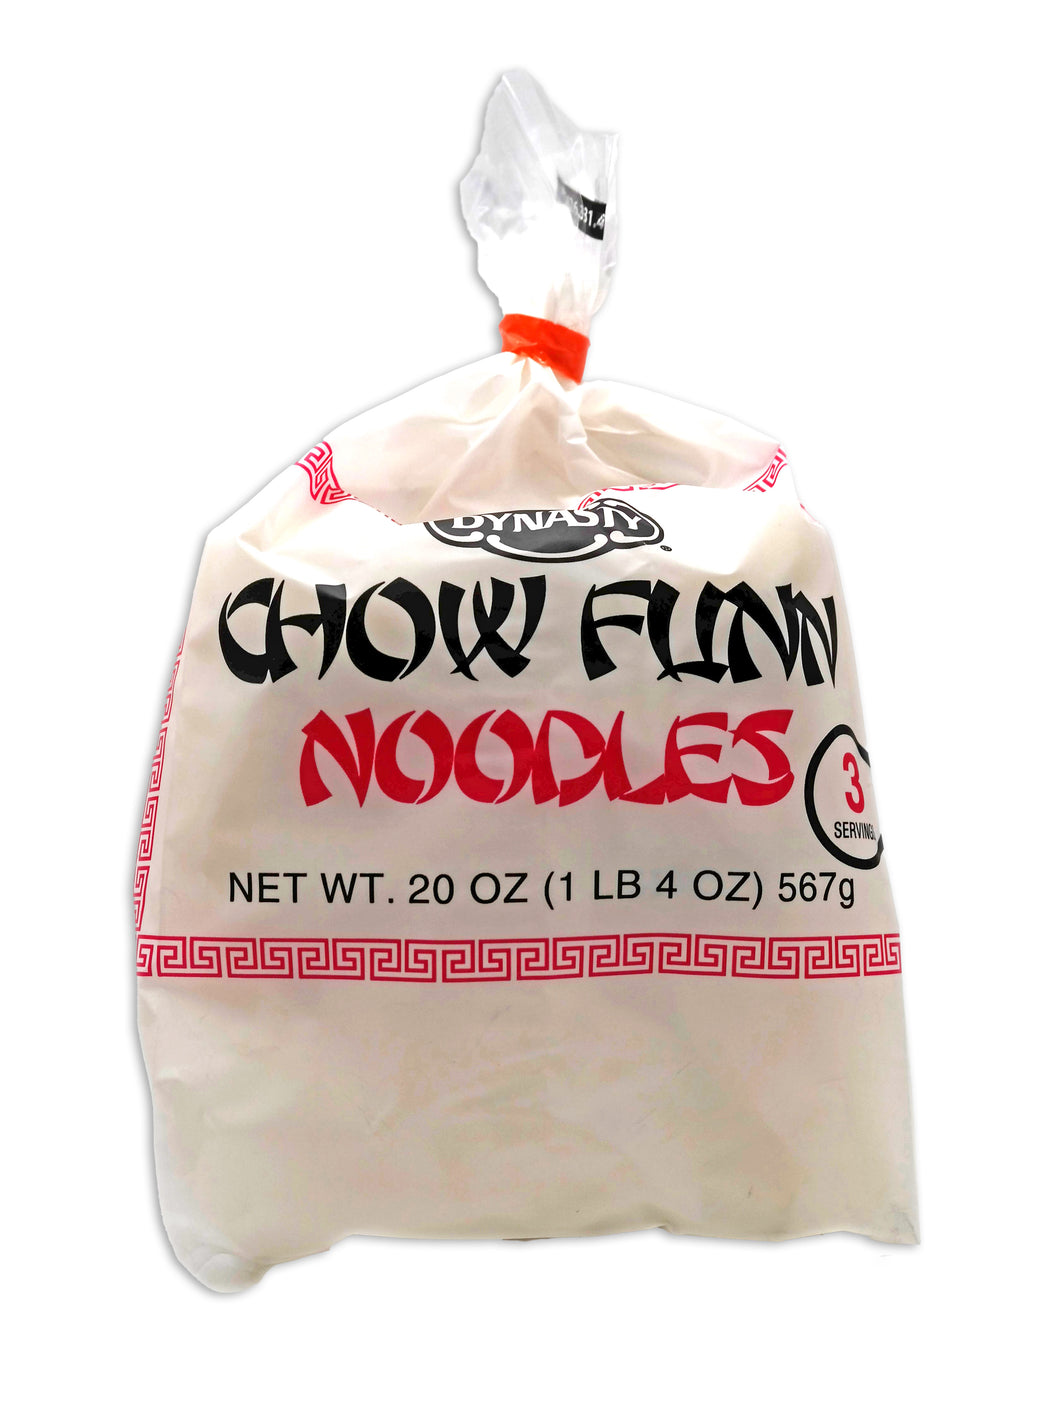 Dynasty Chow Fun Noodles